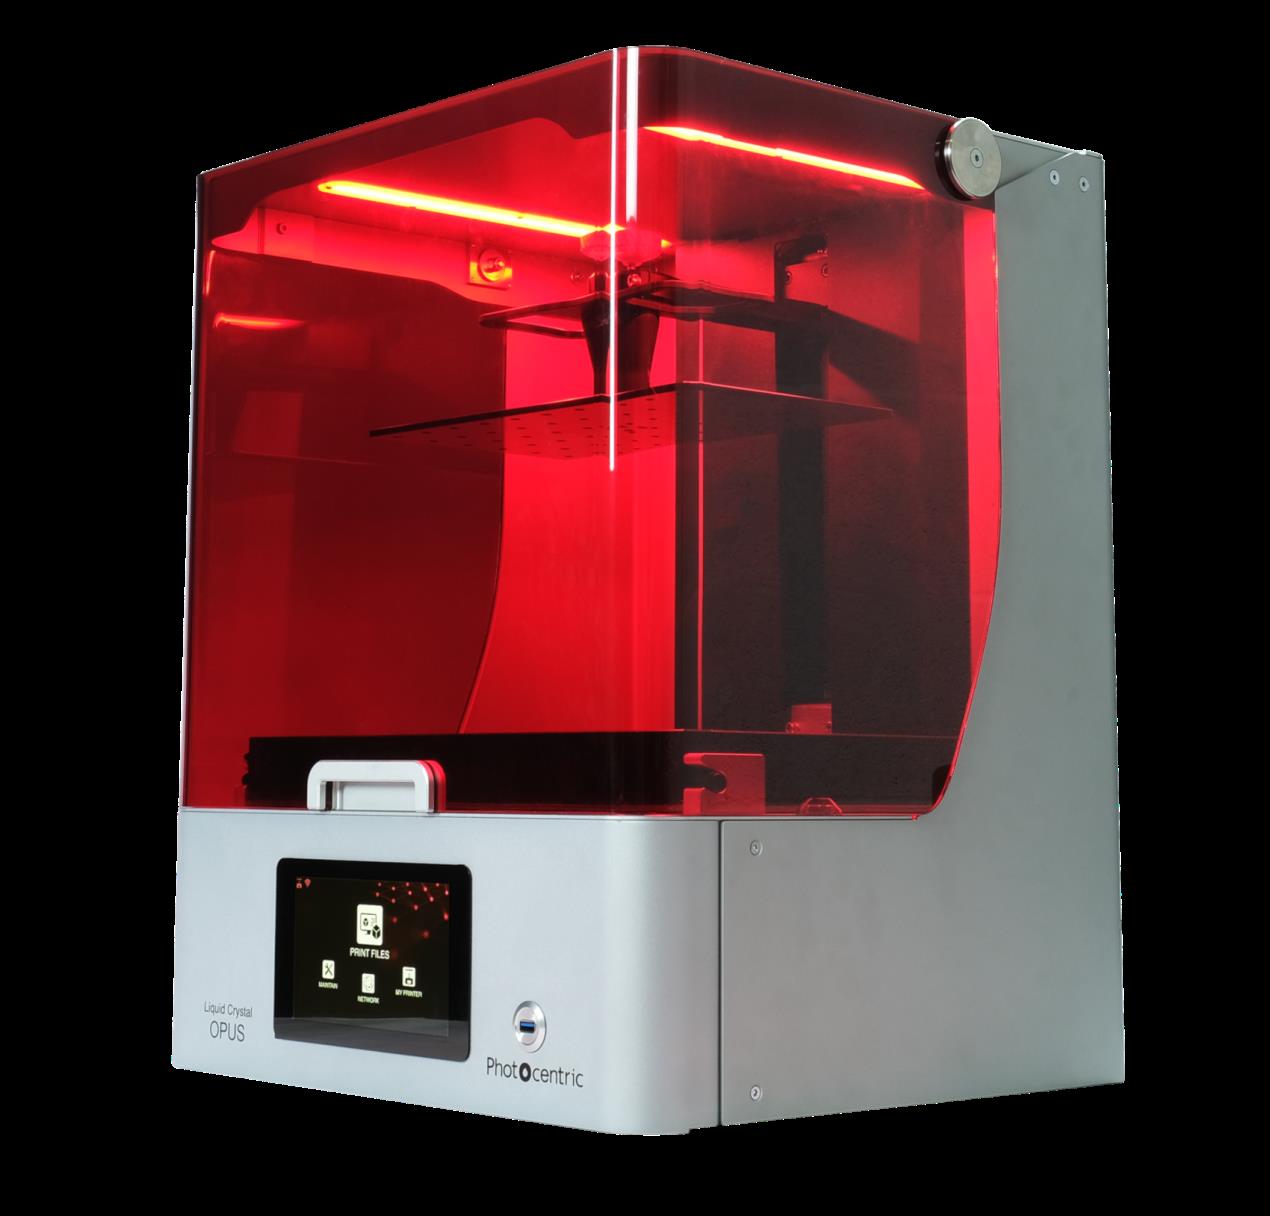 The LC Opus desktop 3D printer. Photo via Photocentric.